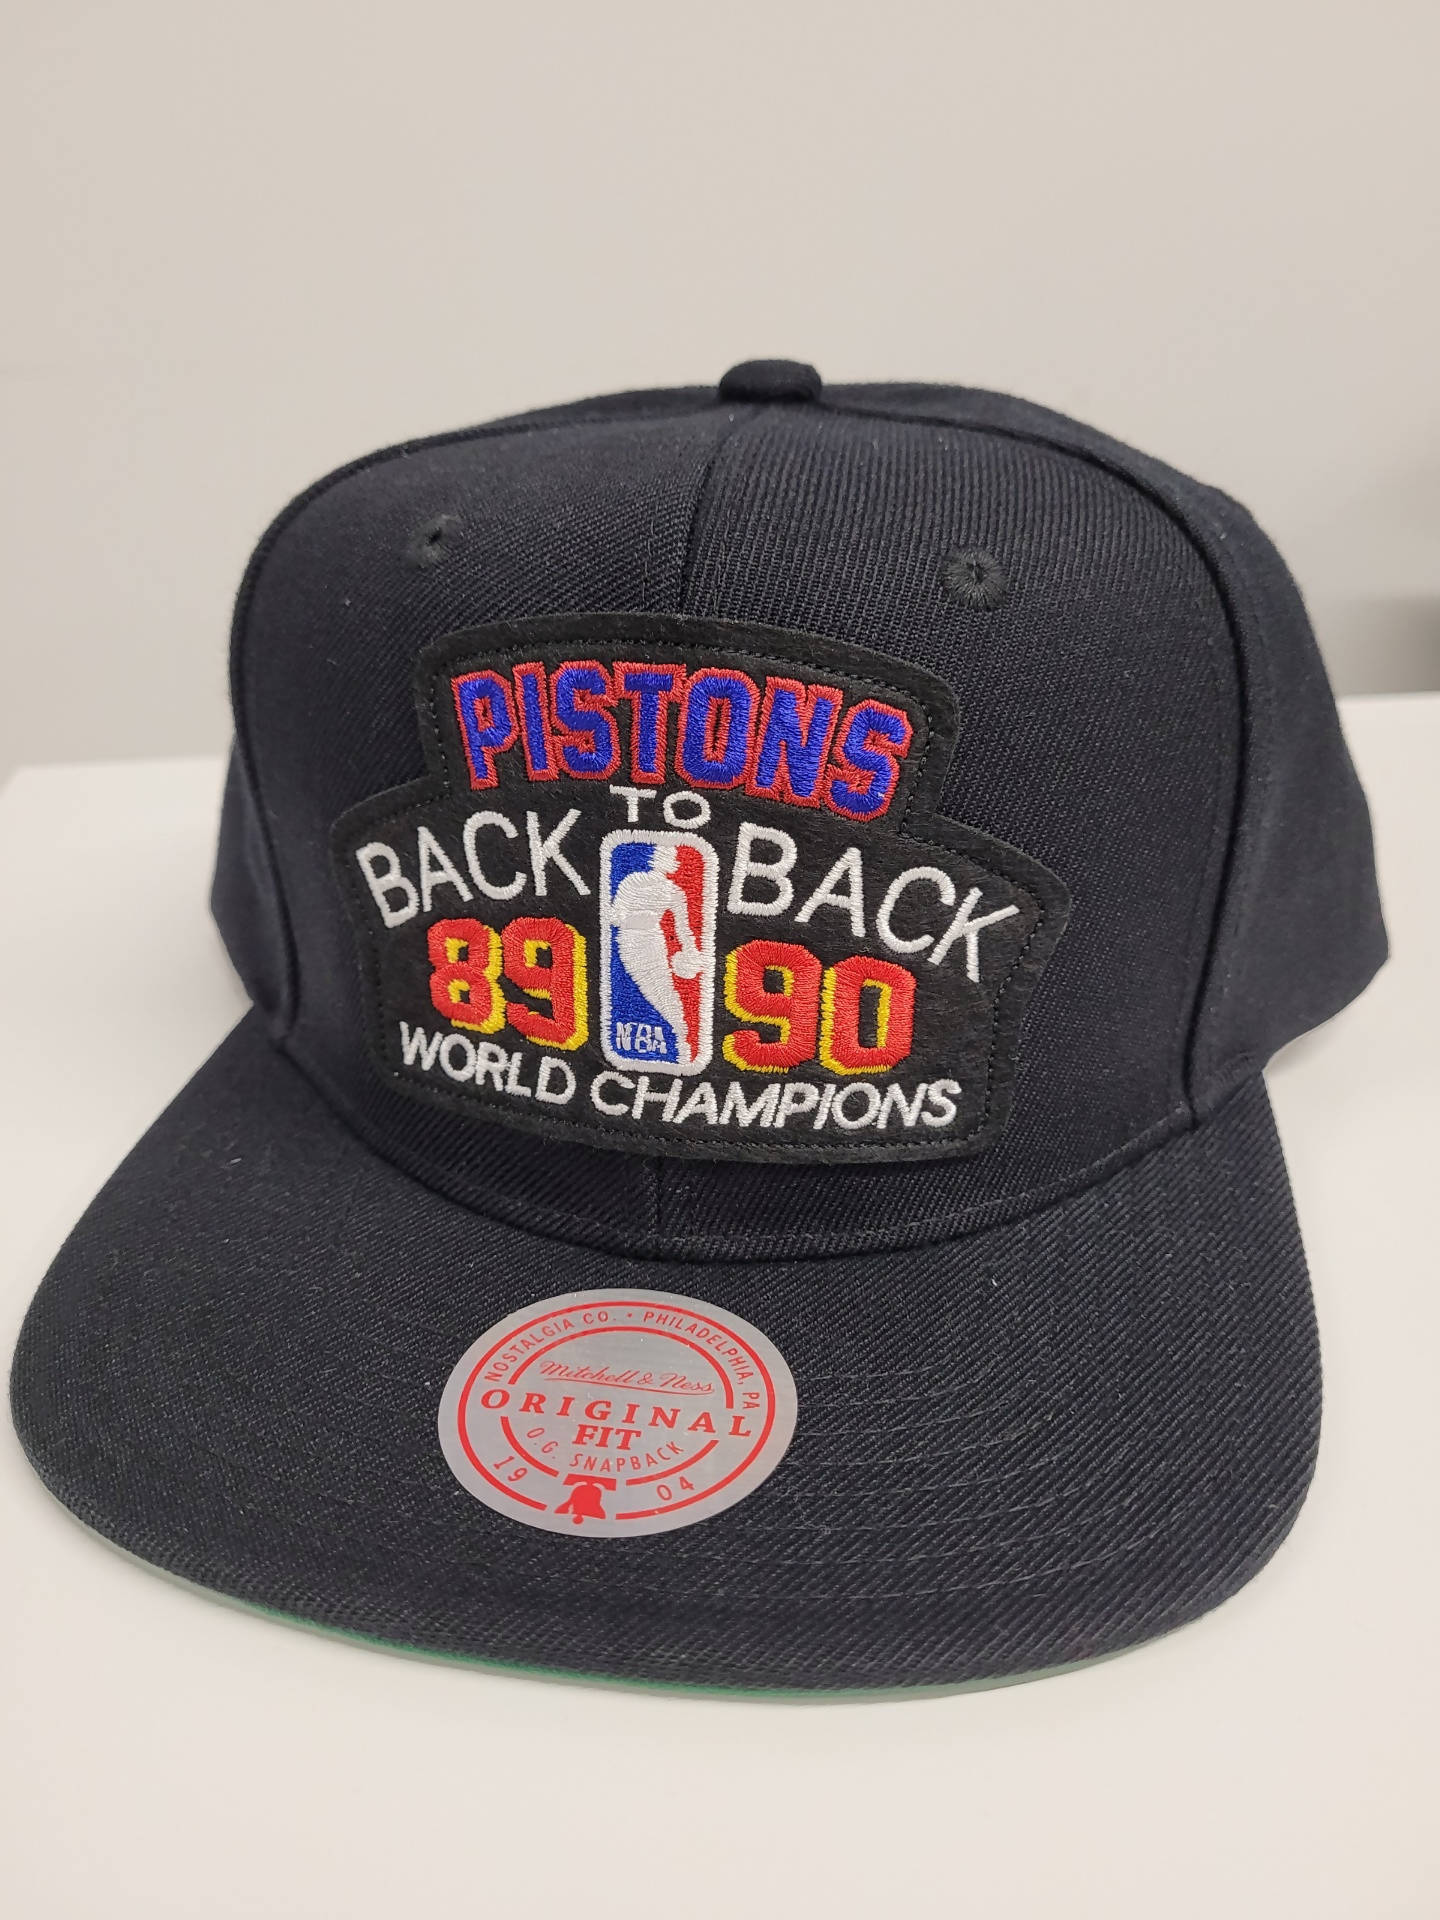 Vintage 90s Detroit Pistons Snapback Hat Akd Grunge 